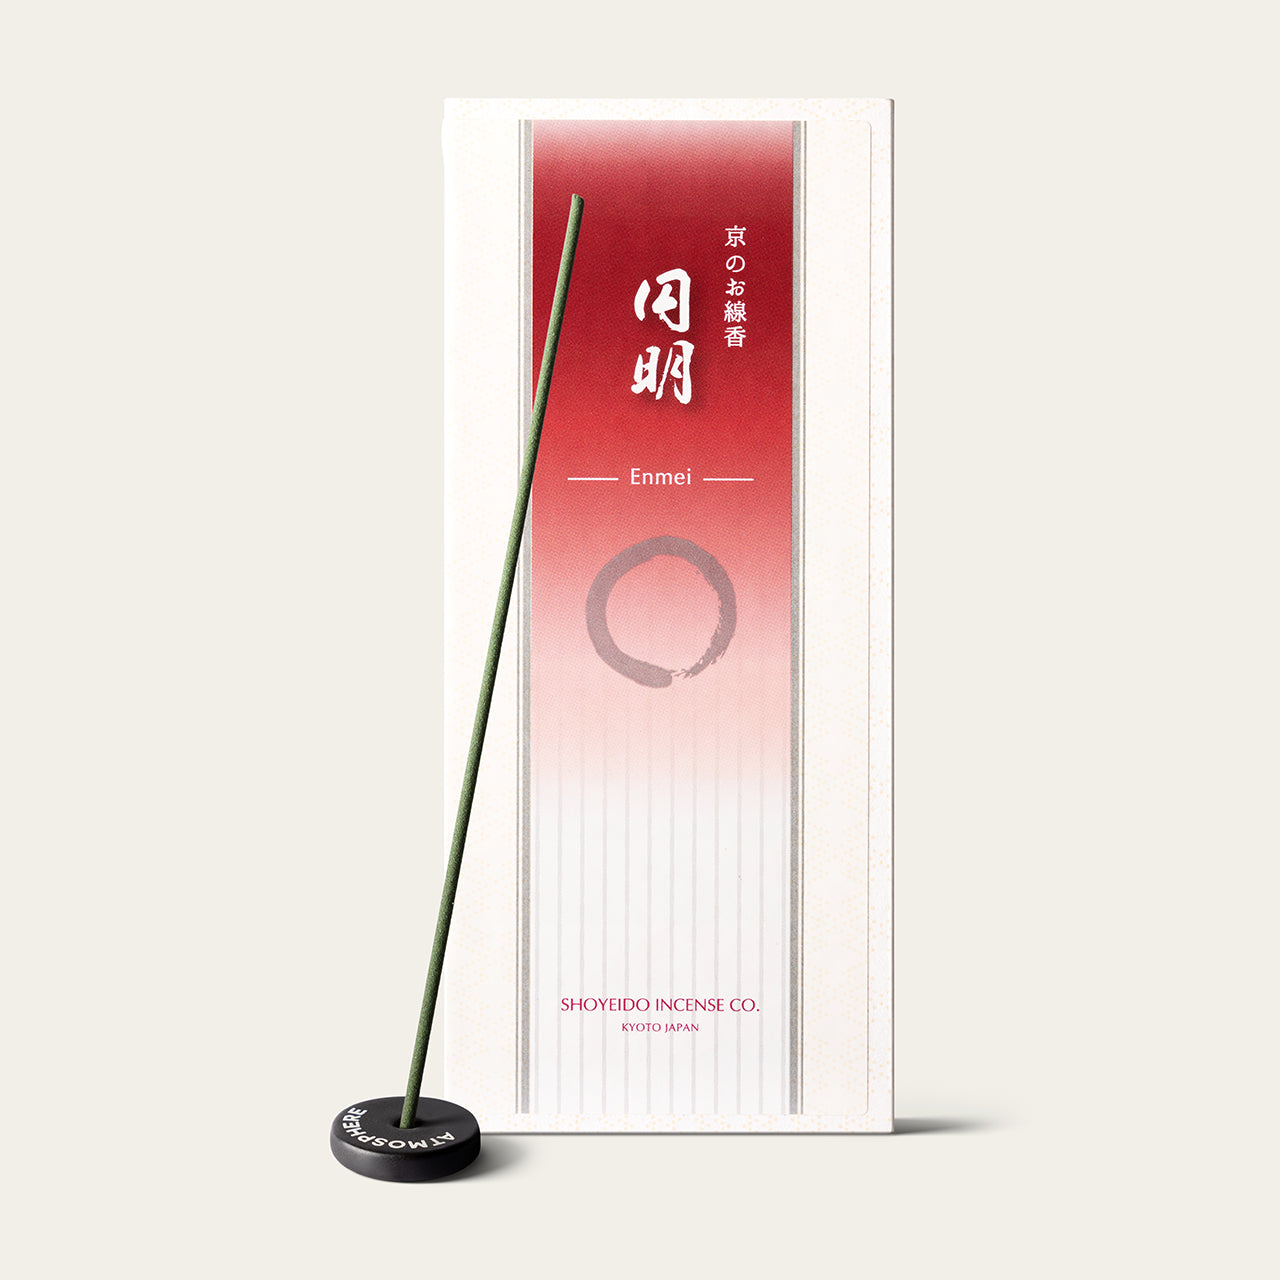 Shoyeido Daily Circle Enmei Japanese incense sticks (165 sticks) with Atmosphere ceramic incense holder